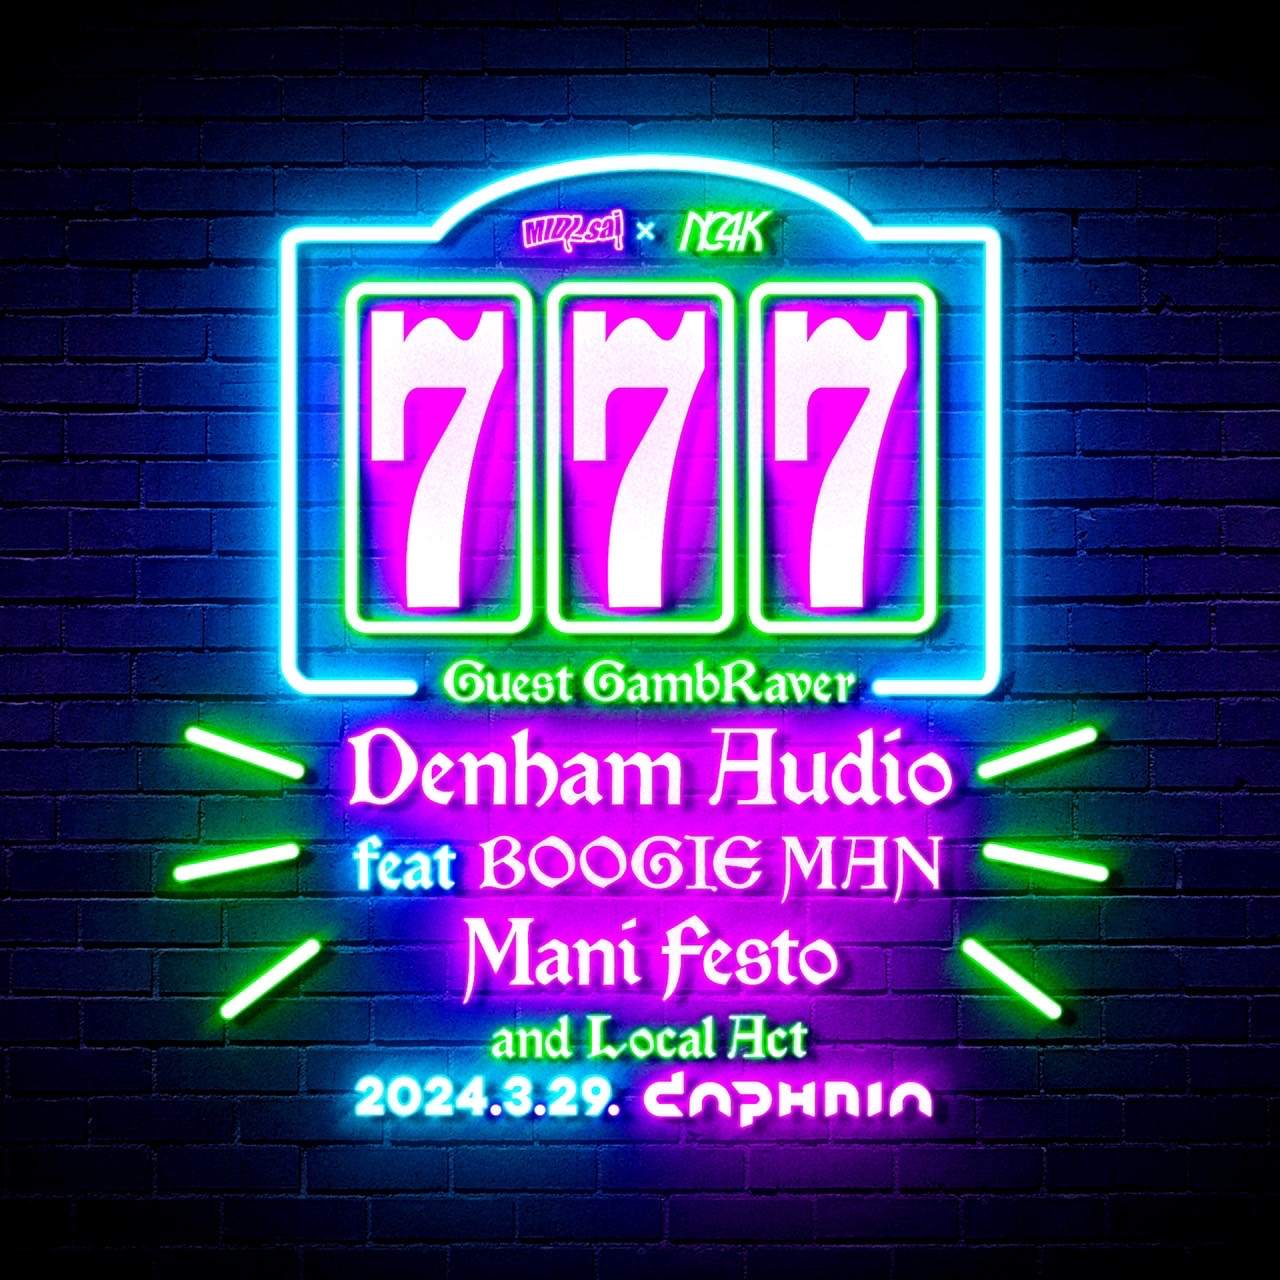 MIDI_sai × NC4K Pres. 777 with Denham Audio Mani Festo BOOGIE MAN - Página trasera